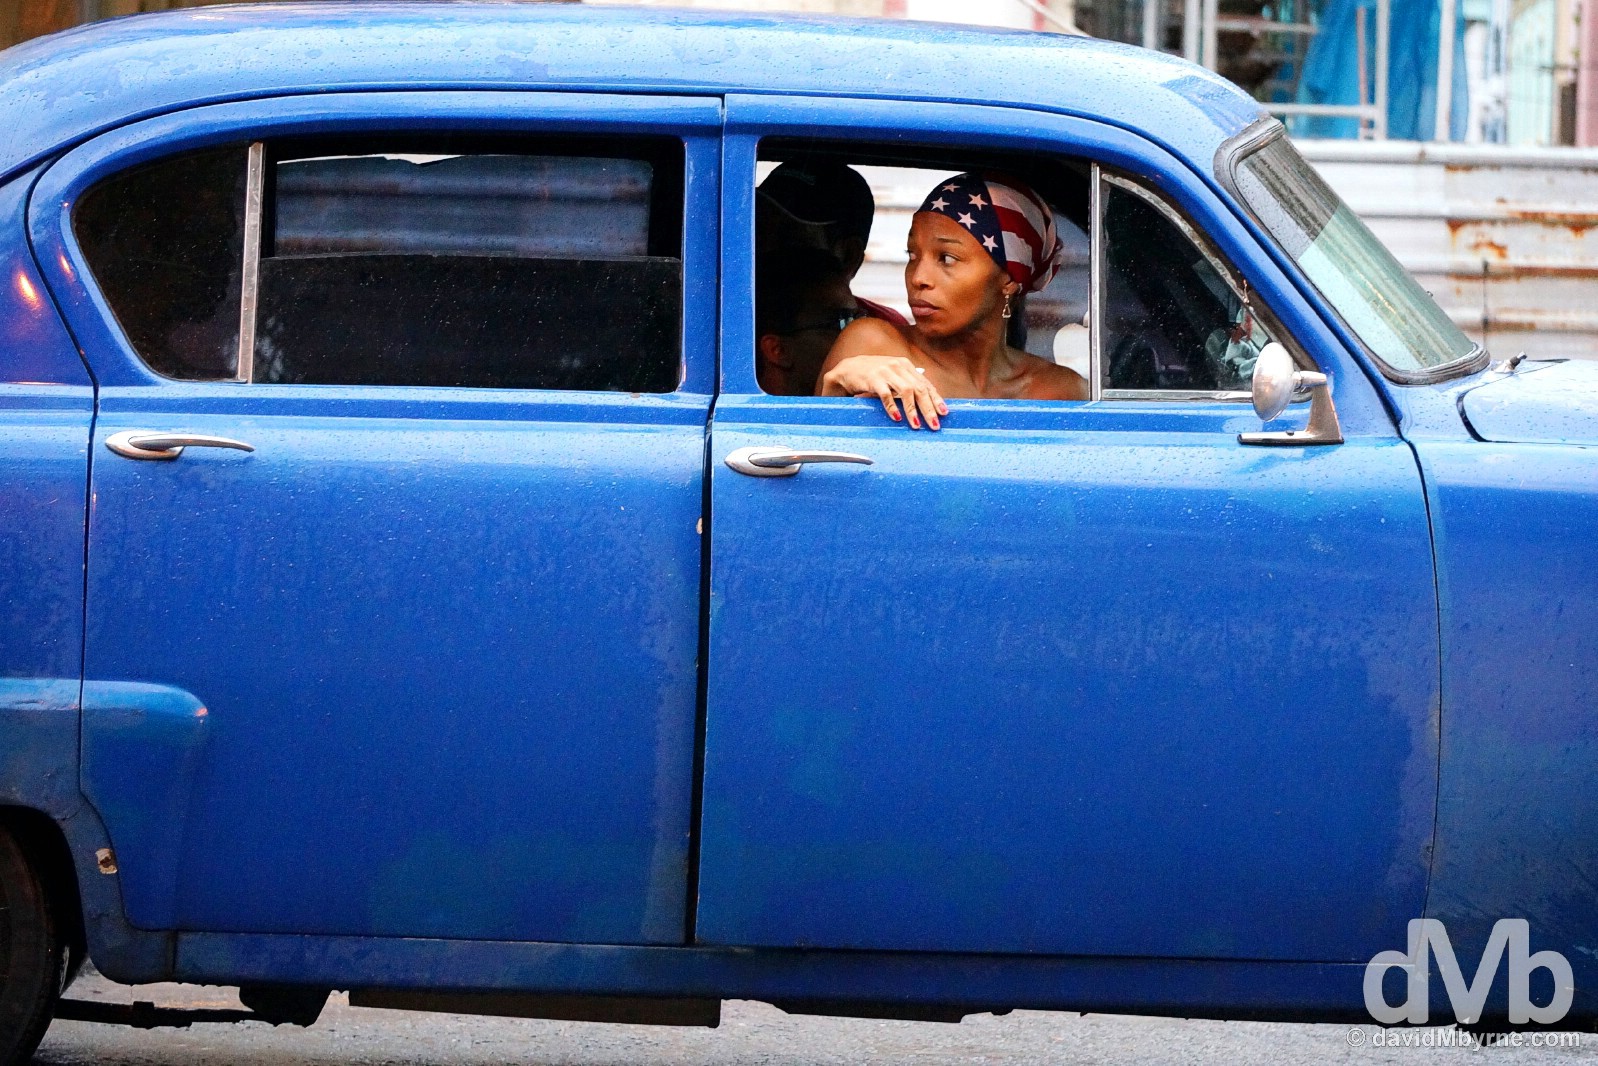 On the streets of Havana, Cuba. April 30, 2015.